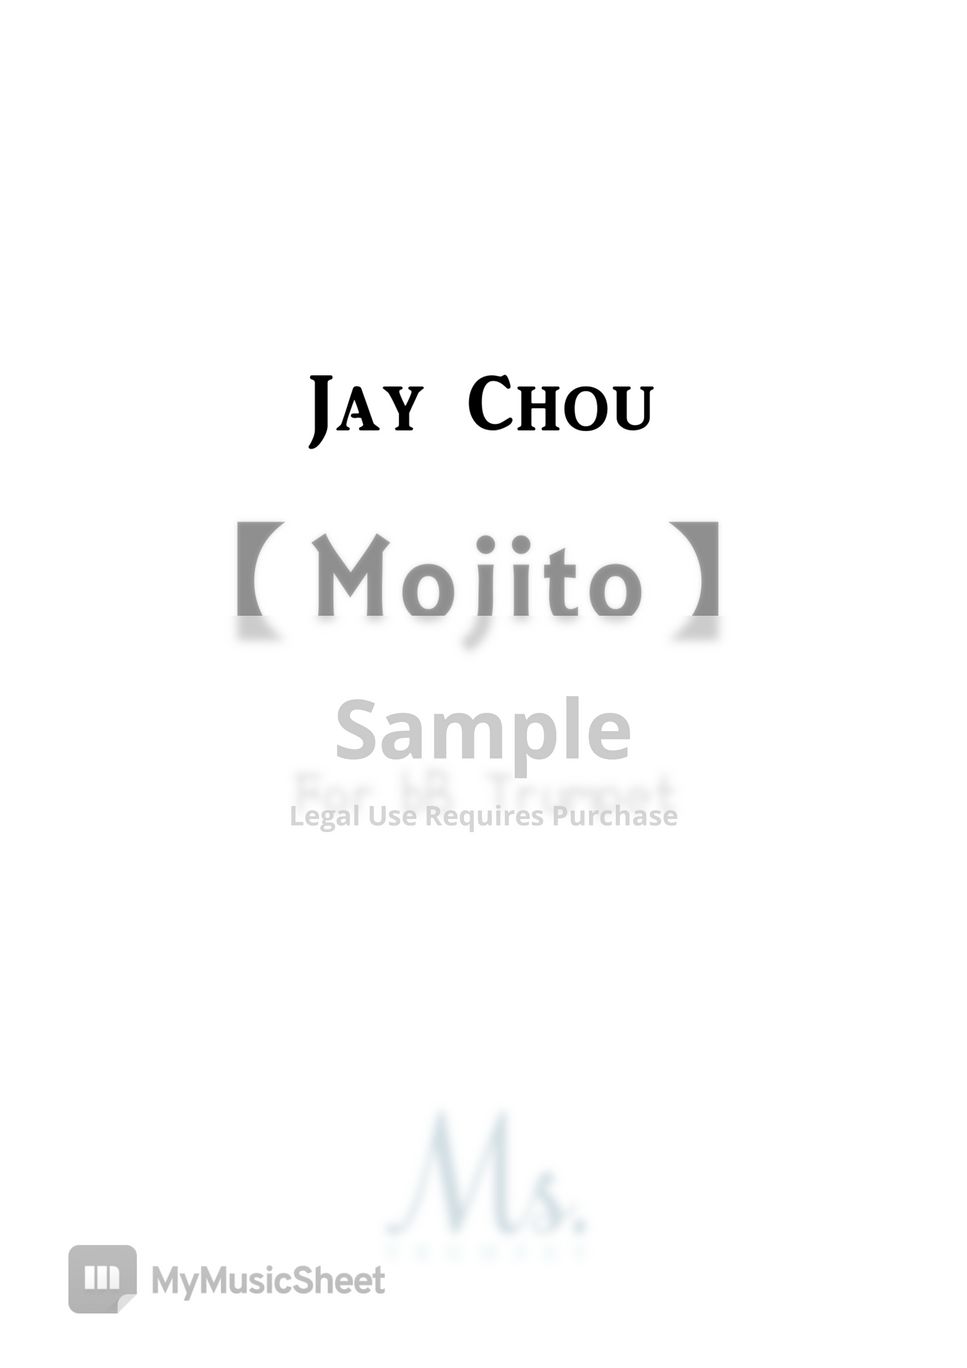 Jay Chou - Mojito